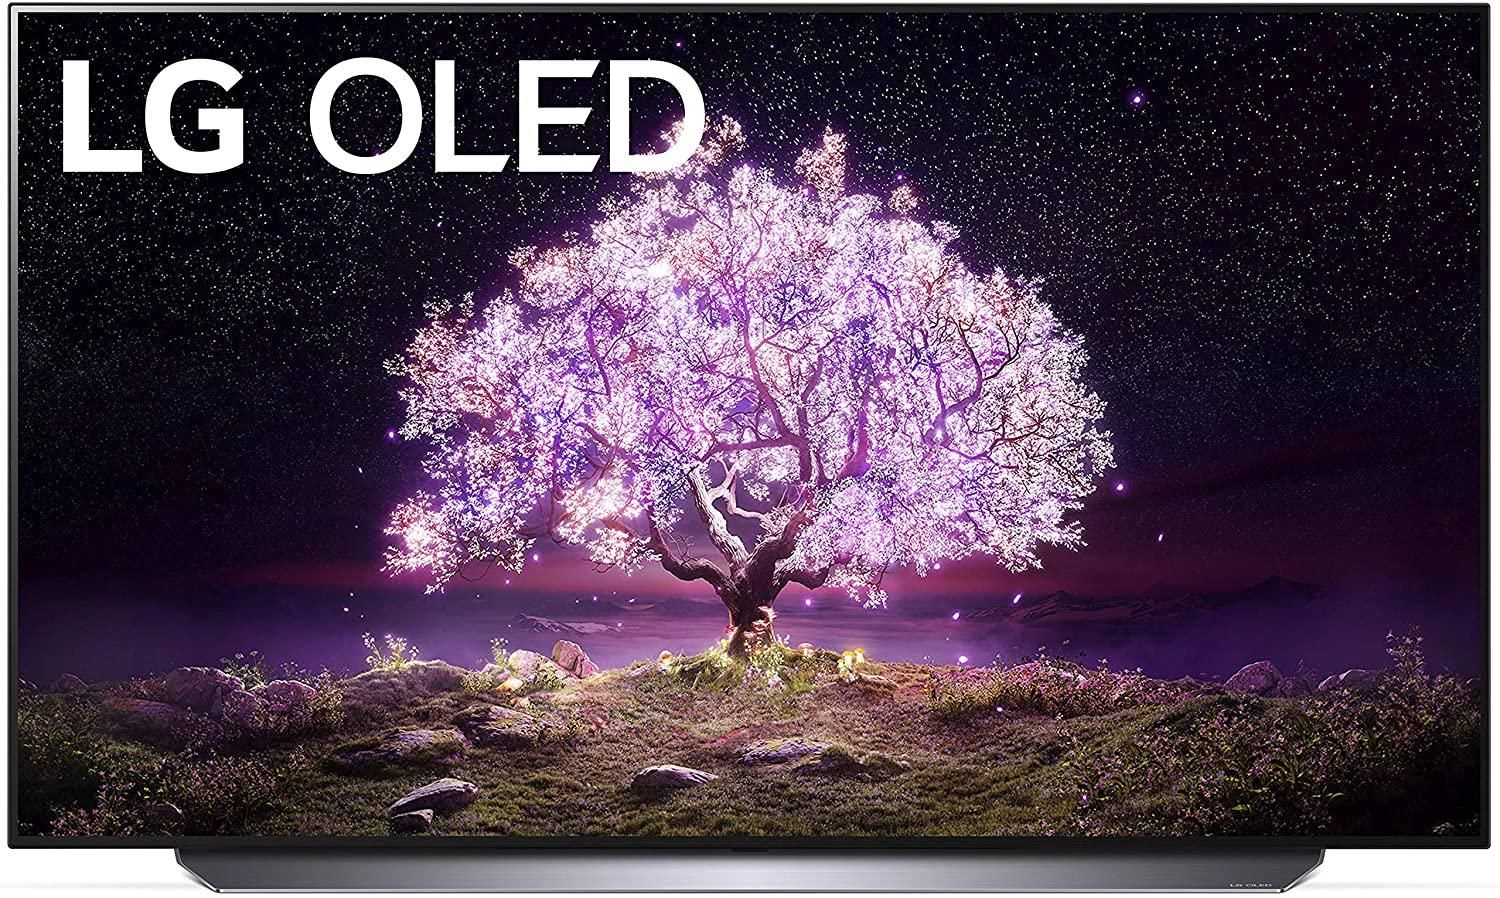 LG OLED C1 Series with purple tree background product box image